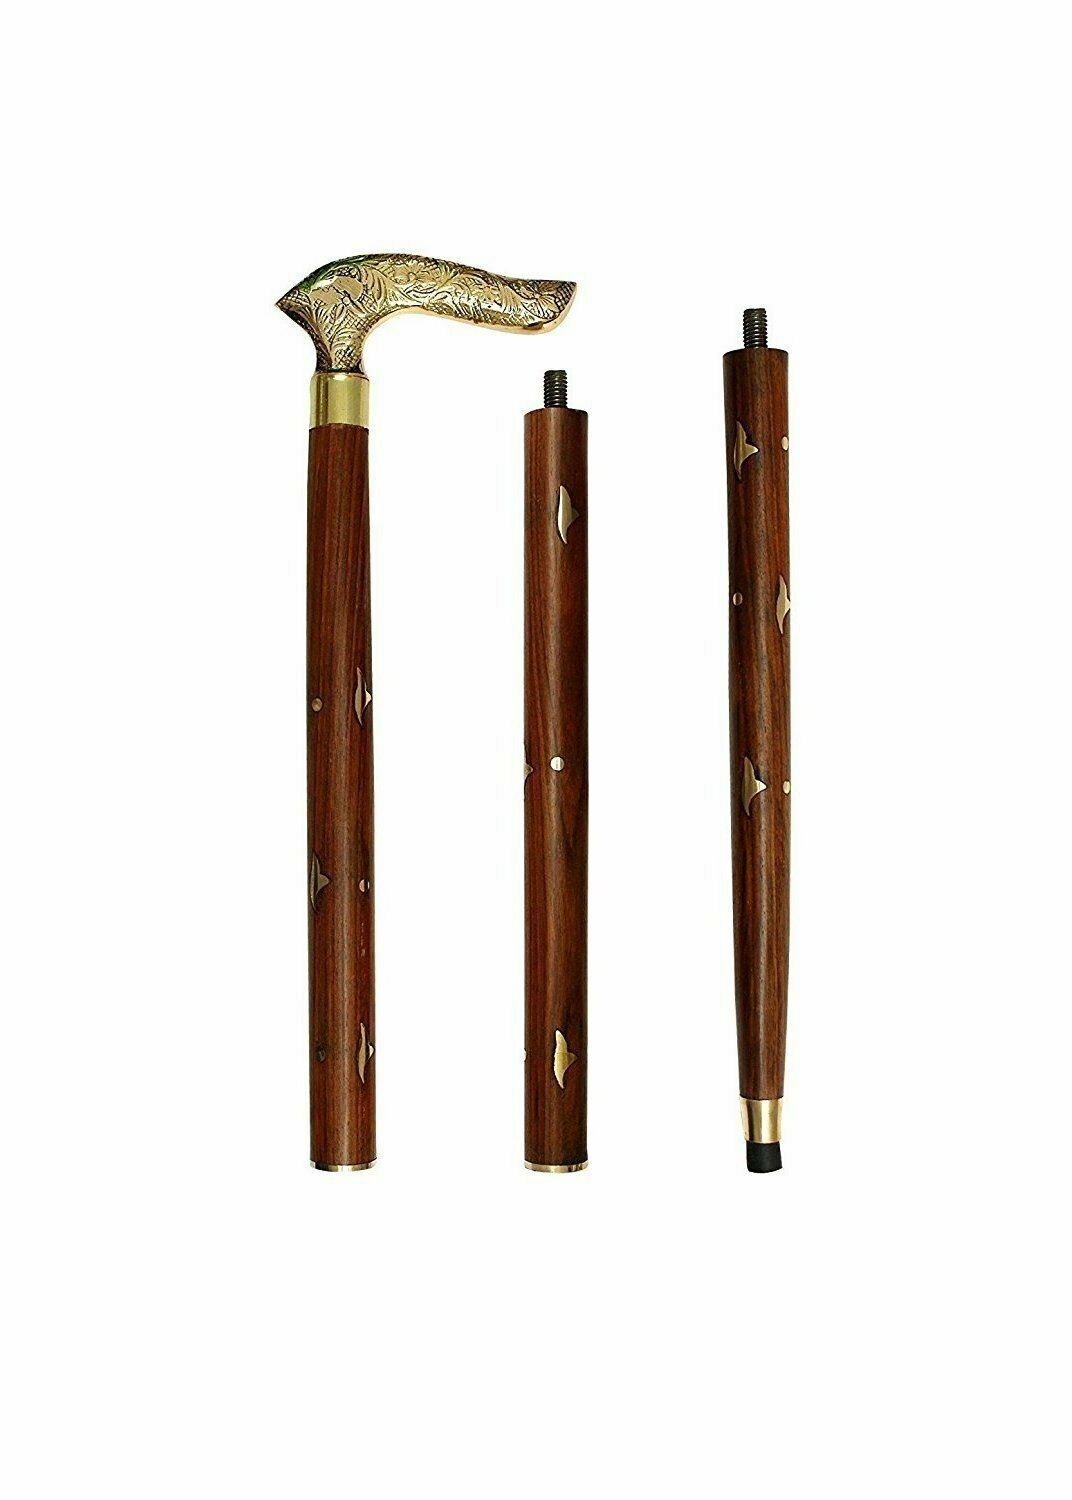 Working Best Brass Derby Head Handle Folding Wooden Walking Stick Cane Vintage